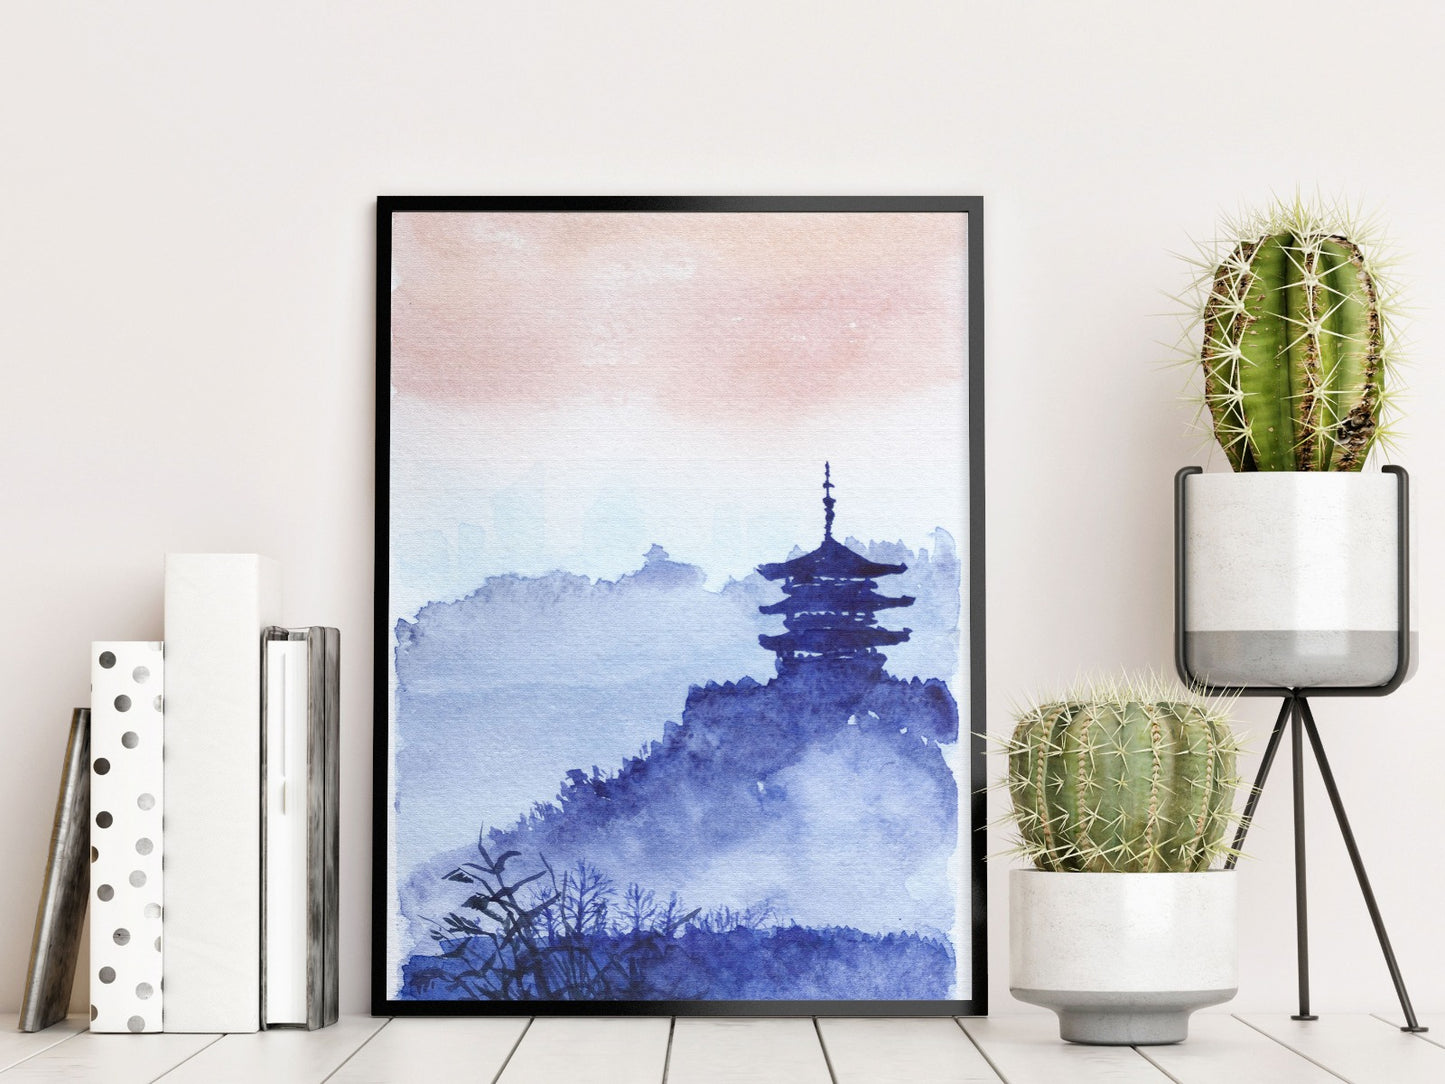  Akvarel japansk tempel skov plakat